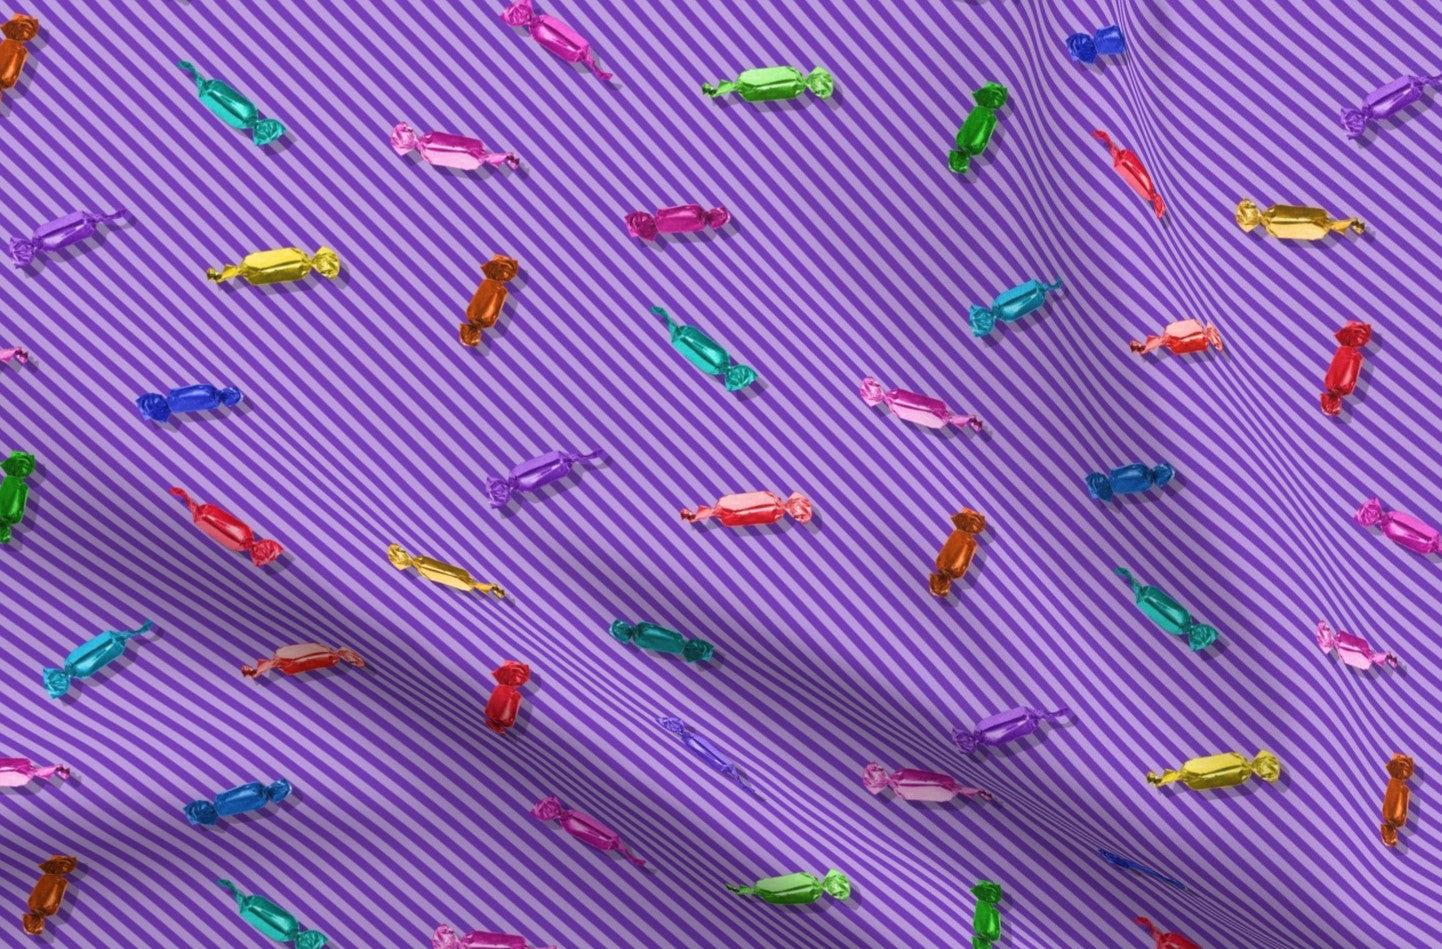 Hard Candy, Purple Stripes Printed Fabric by Studio Ten Design